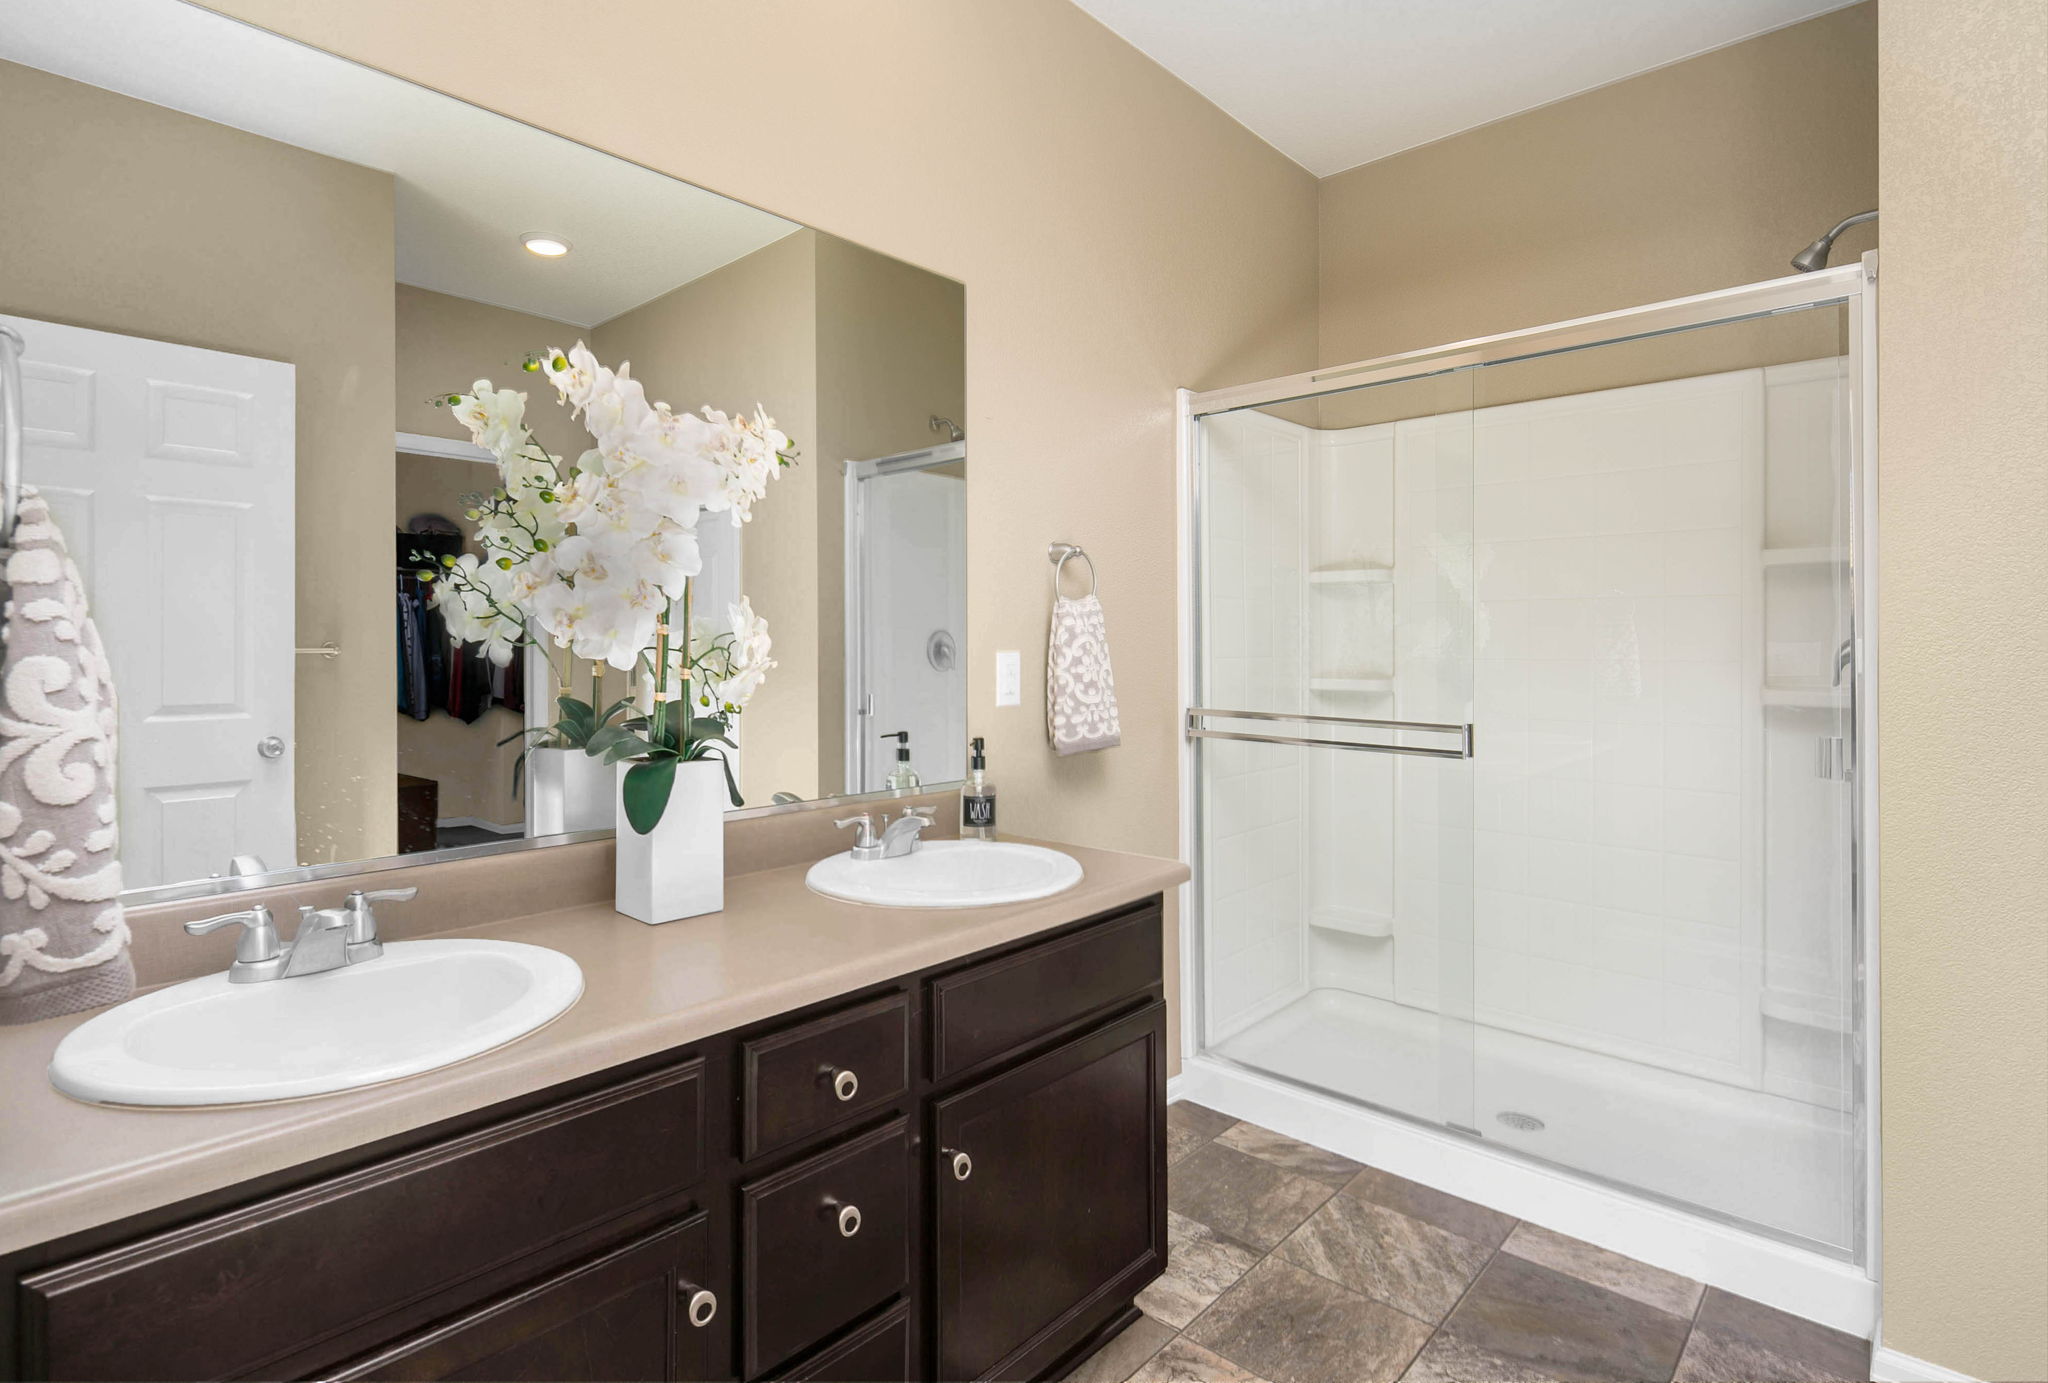 Stunning Master Bathroom Features Dual Sinks